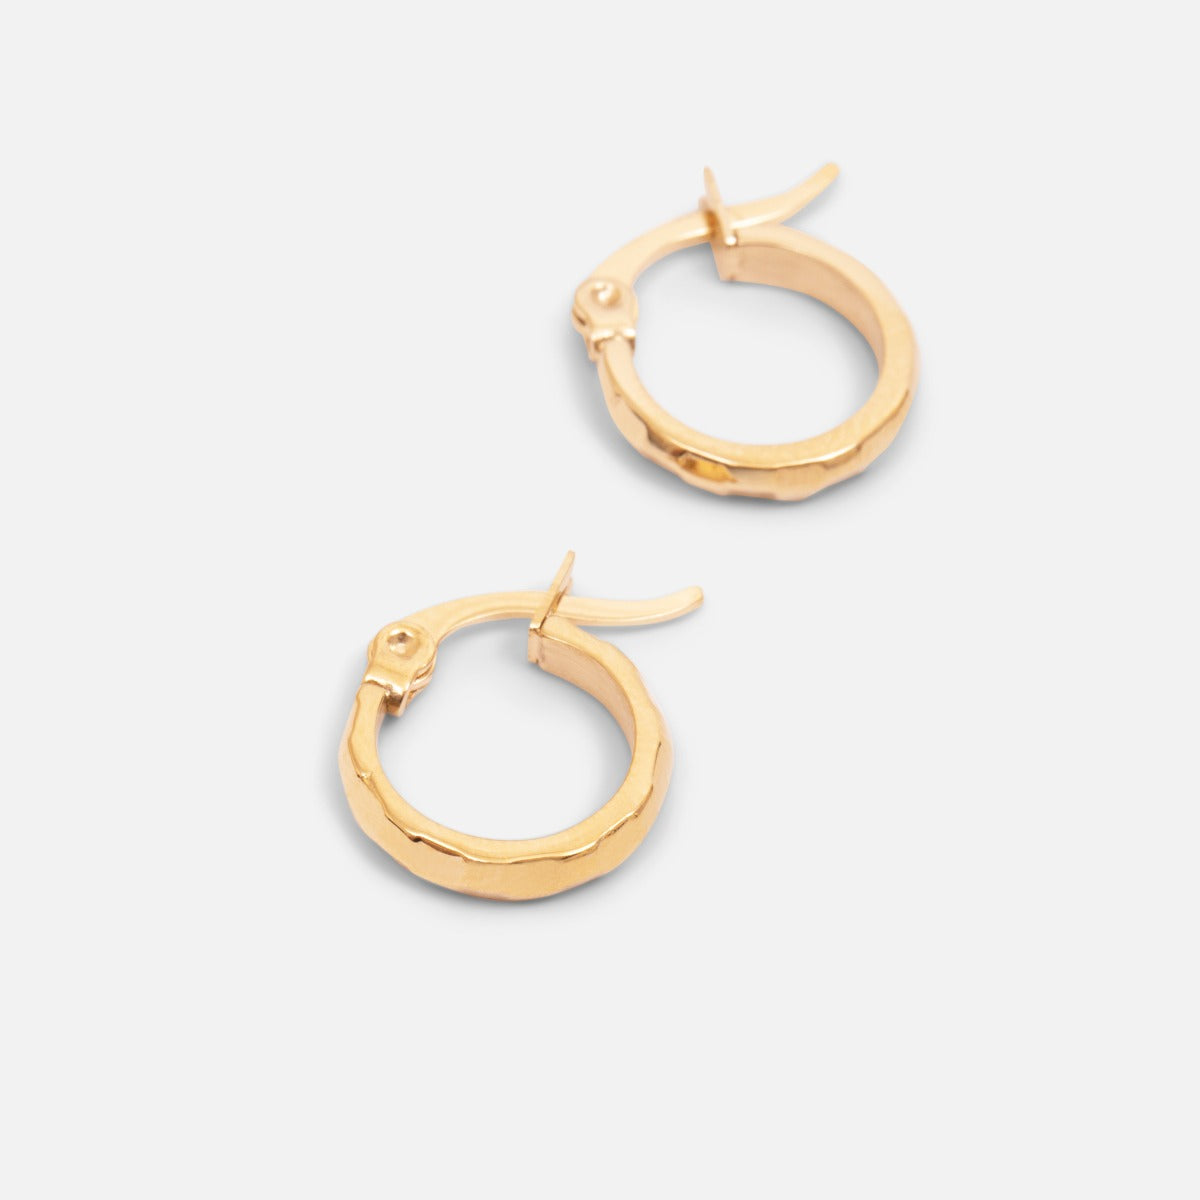 Small golden textured stainless steel hoop earrings